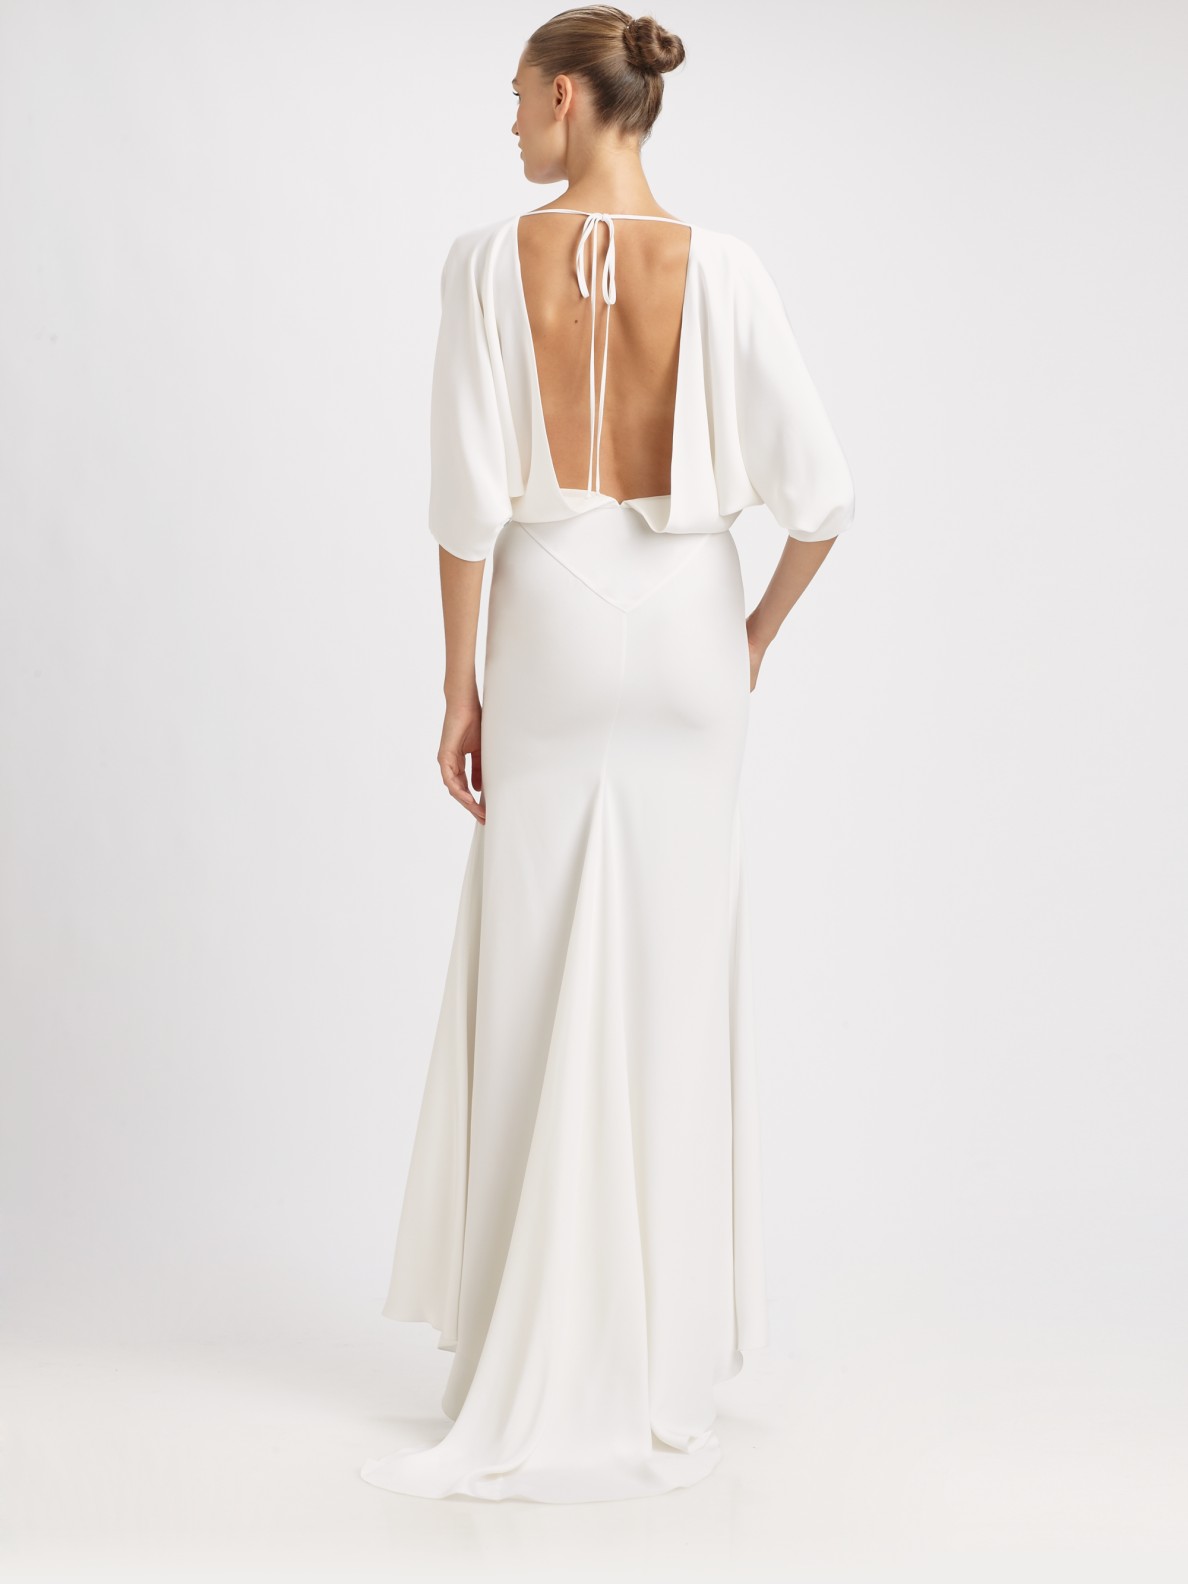 Emilio Pucci Silk Gown in White - Lyst